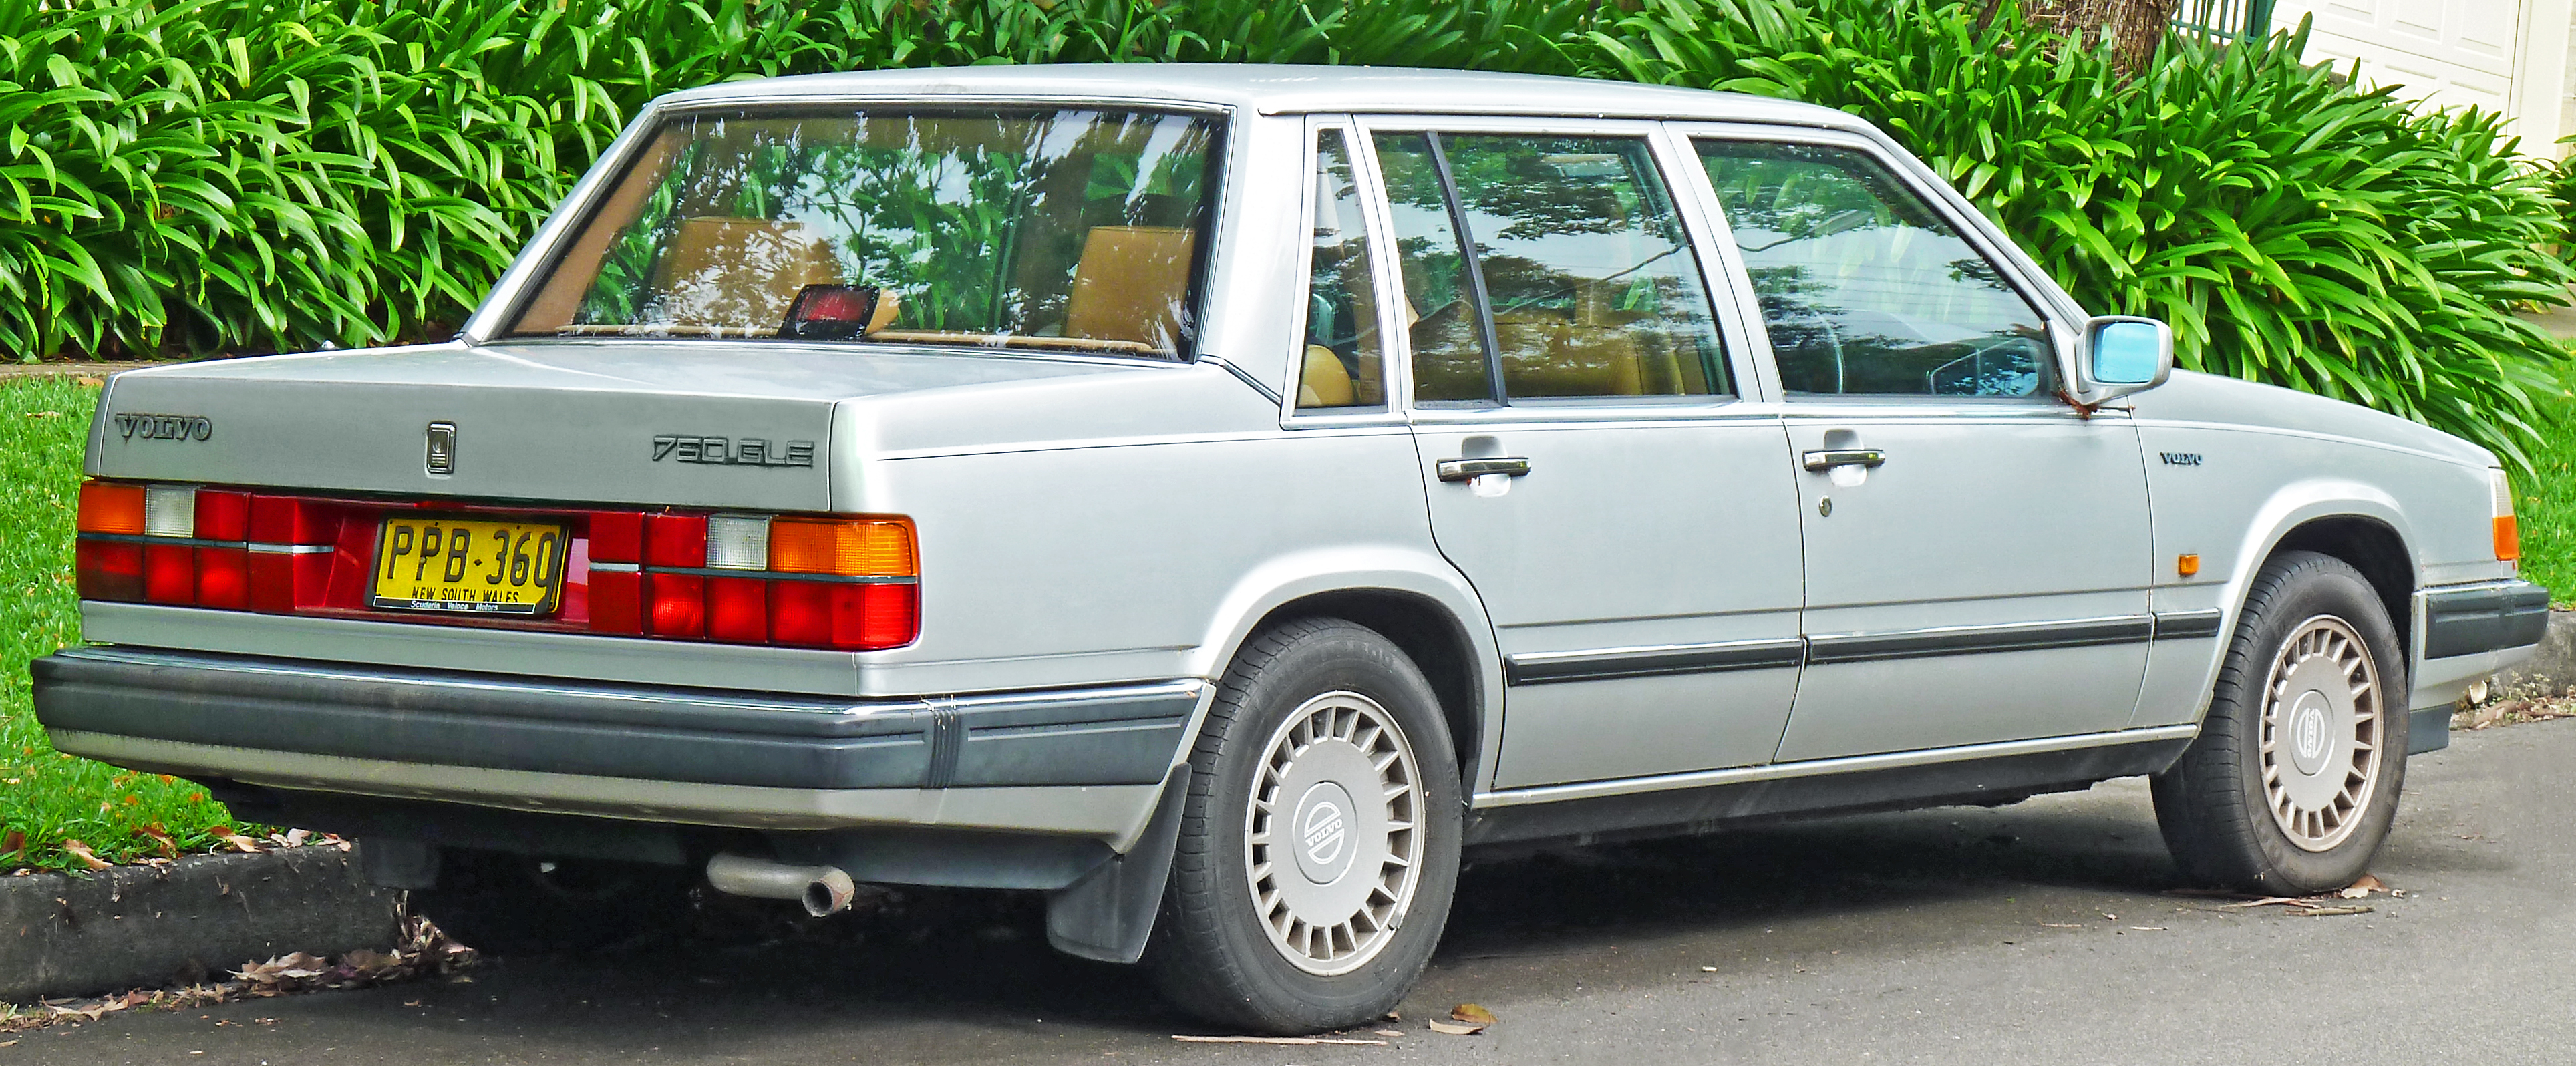 1987-1989 Volvo 760 GLE sedan (2011-11-18) 02